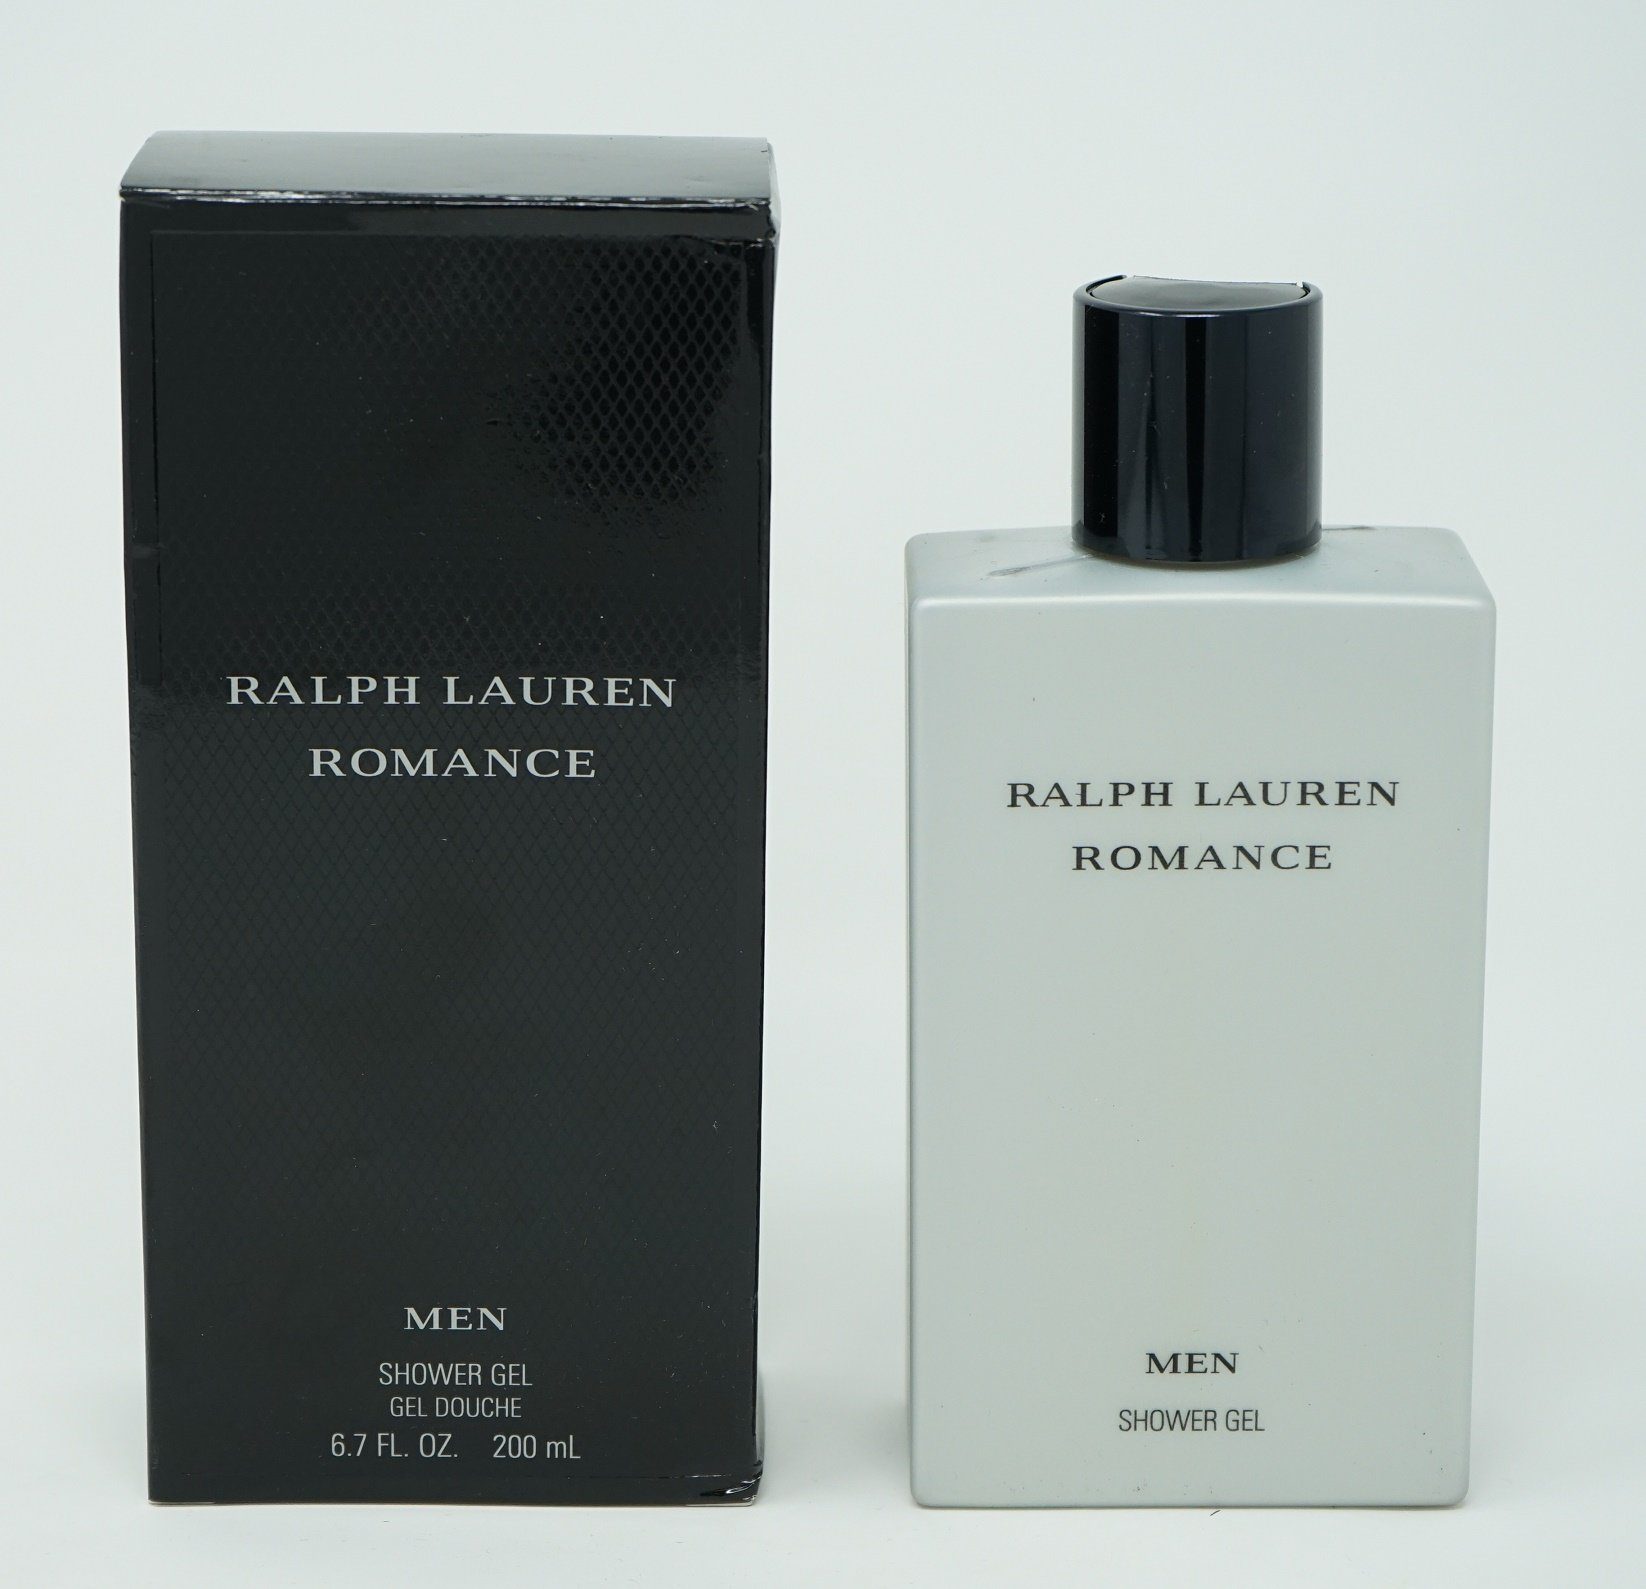 Ralph Lauren Duschpflege Ralph Lauren Romance Men - for Shower Gel 200ml